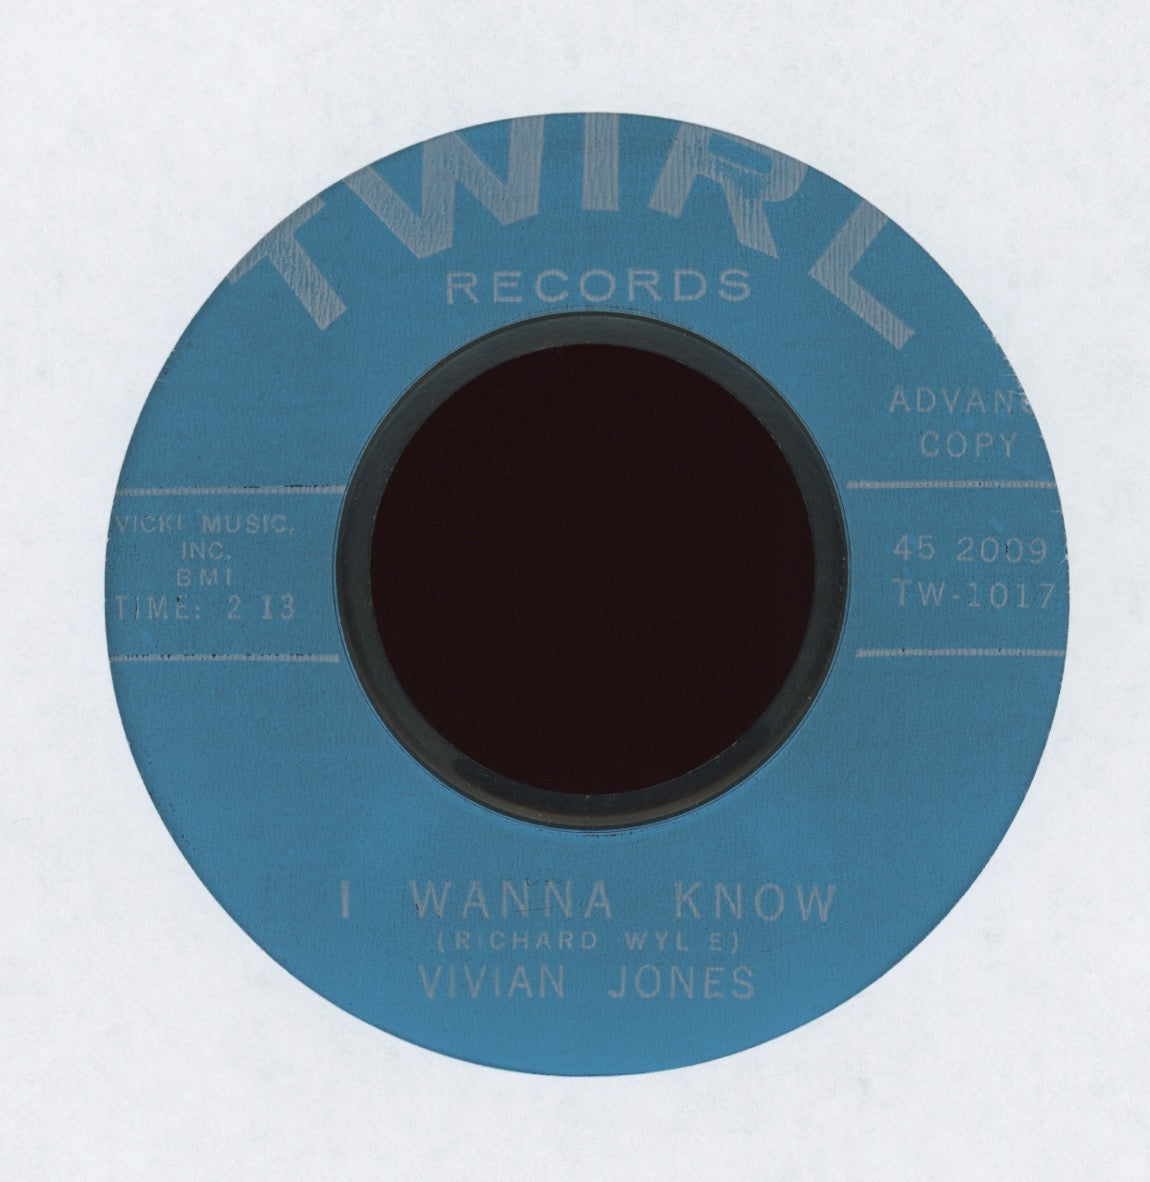 Vivian Jones - I Wanna Know on Twirl Promo R&B 45